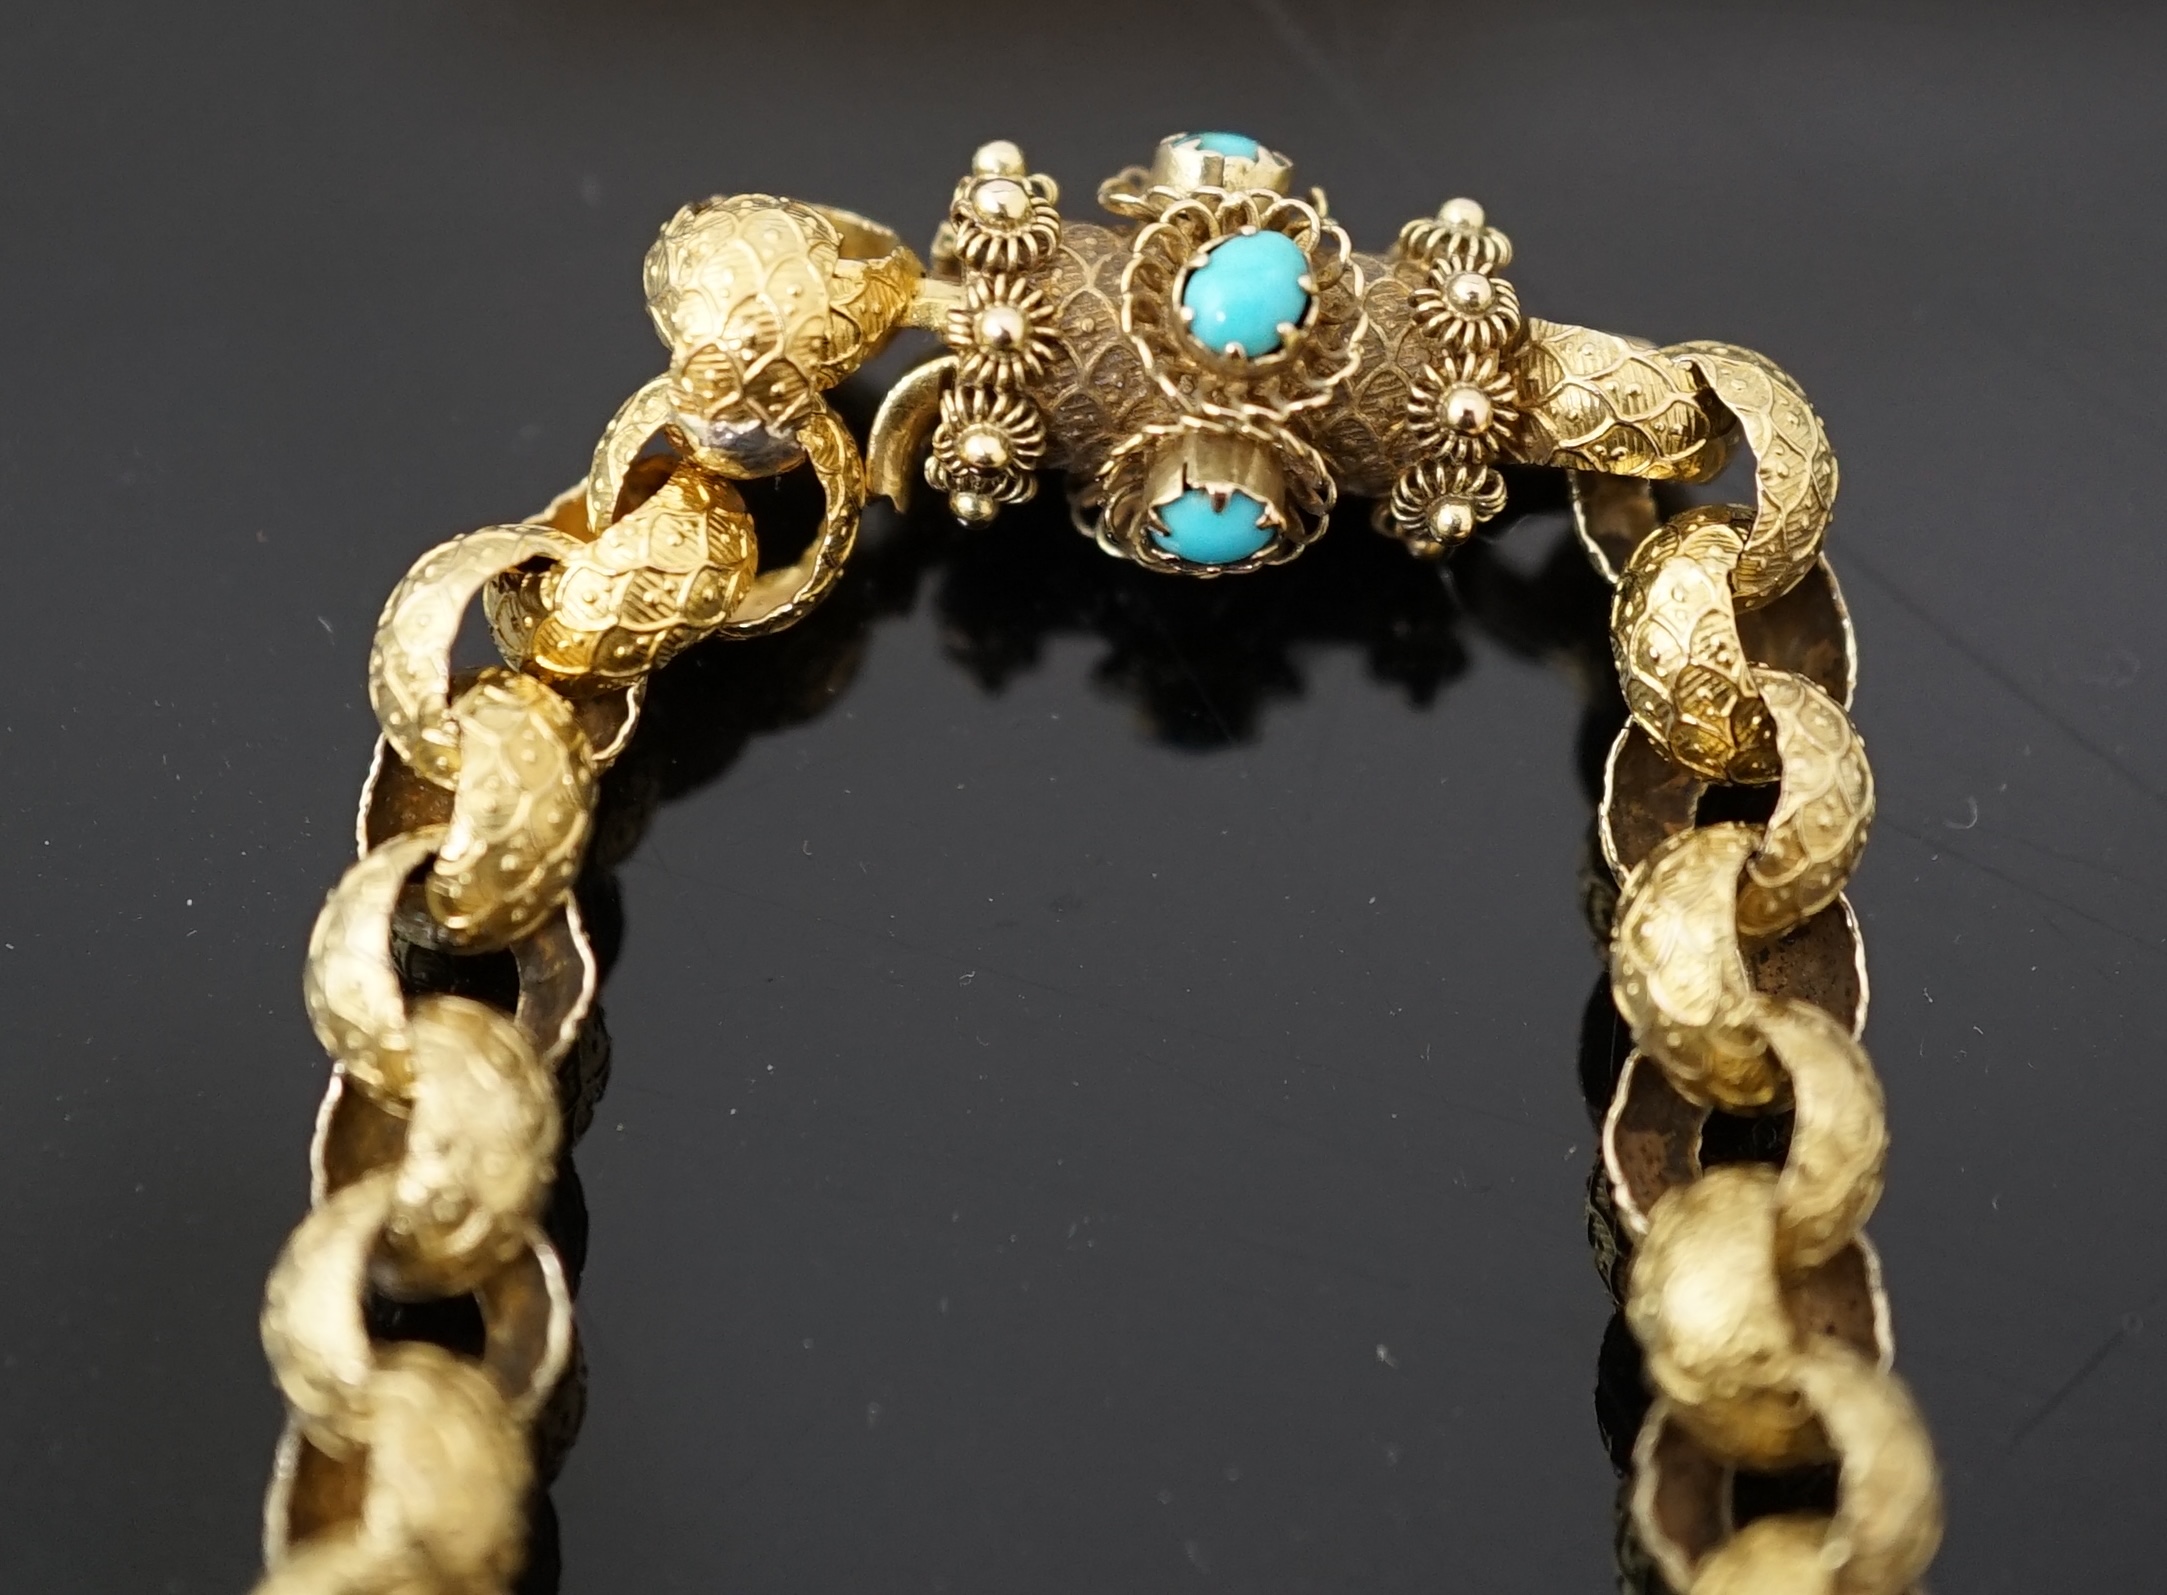 A Georgian embossed gold belcher link choker necklace